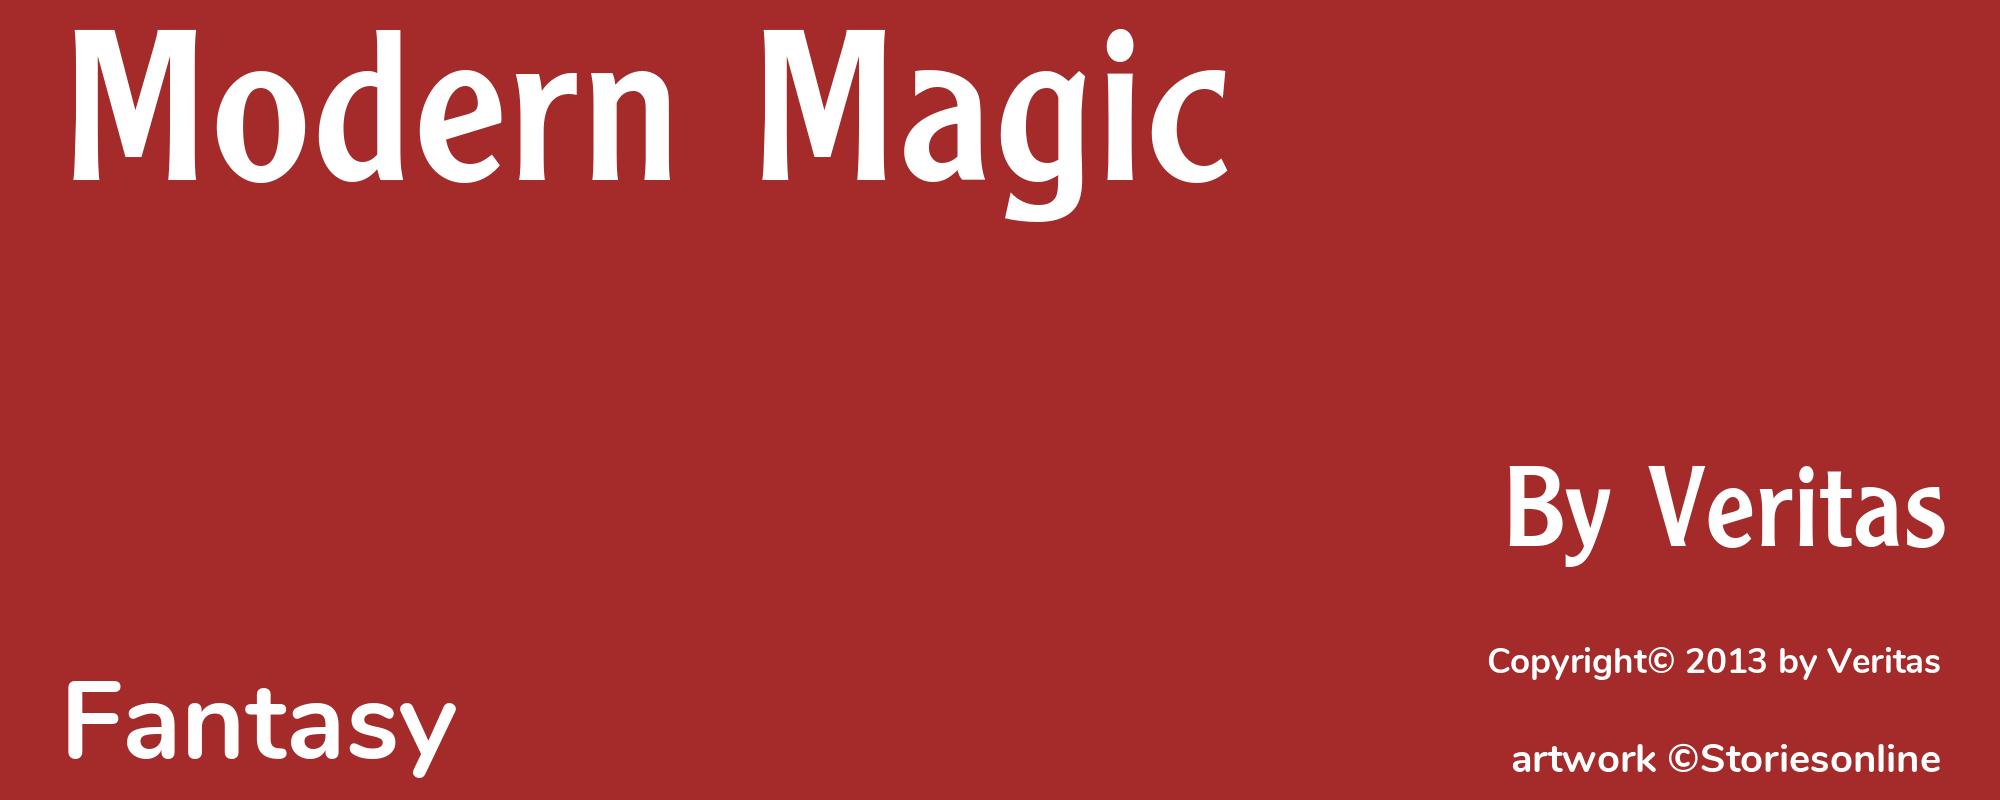 Modern Magic - Cover